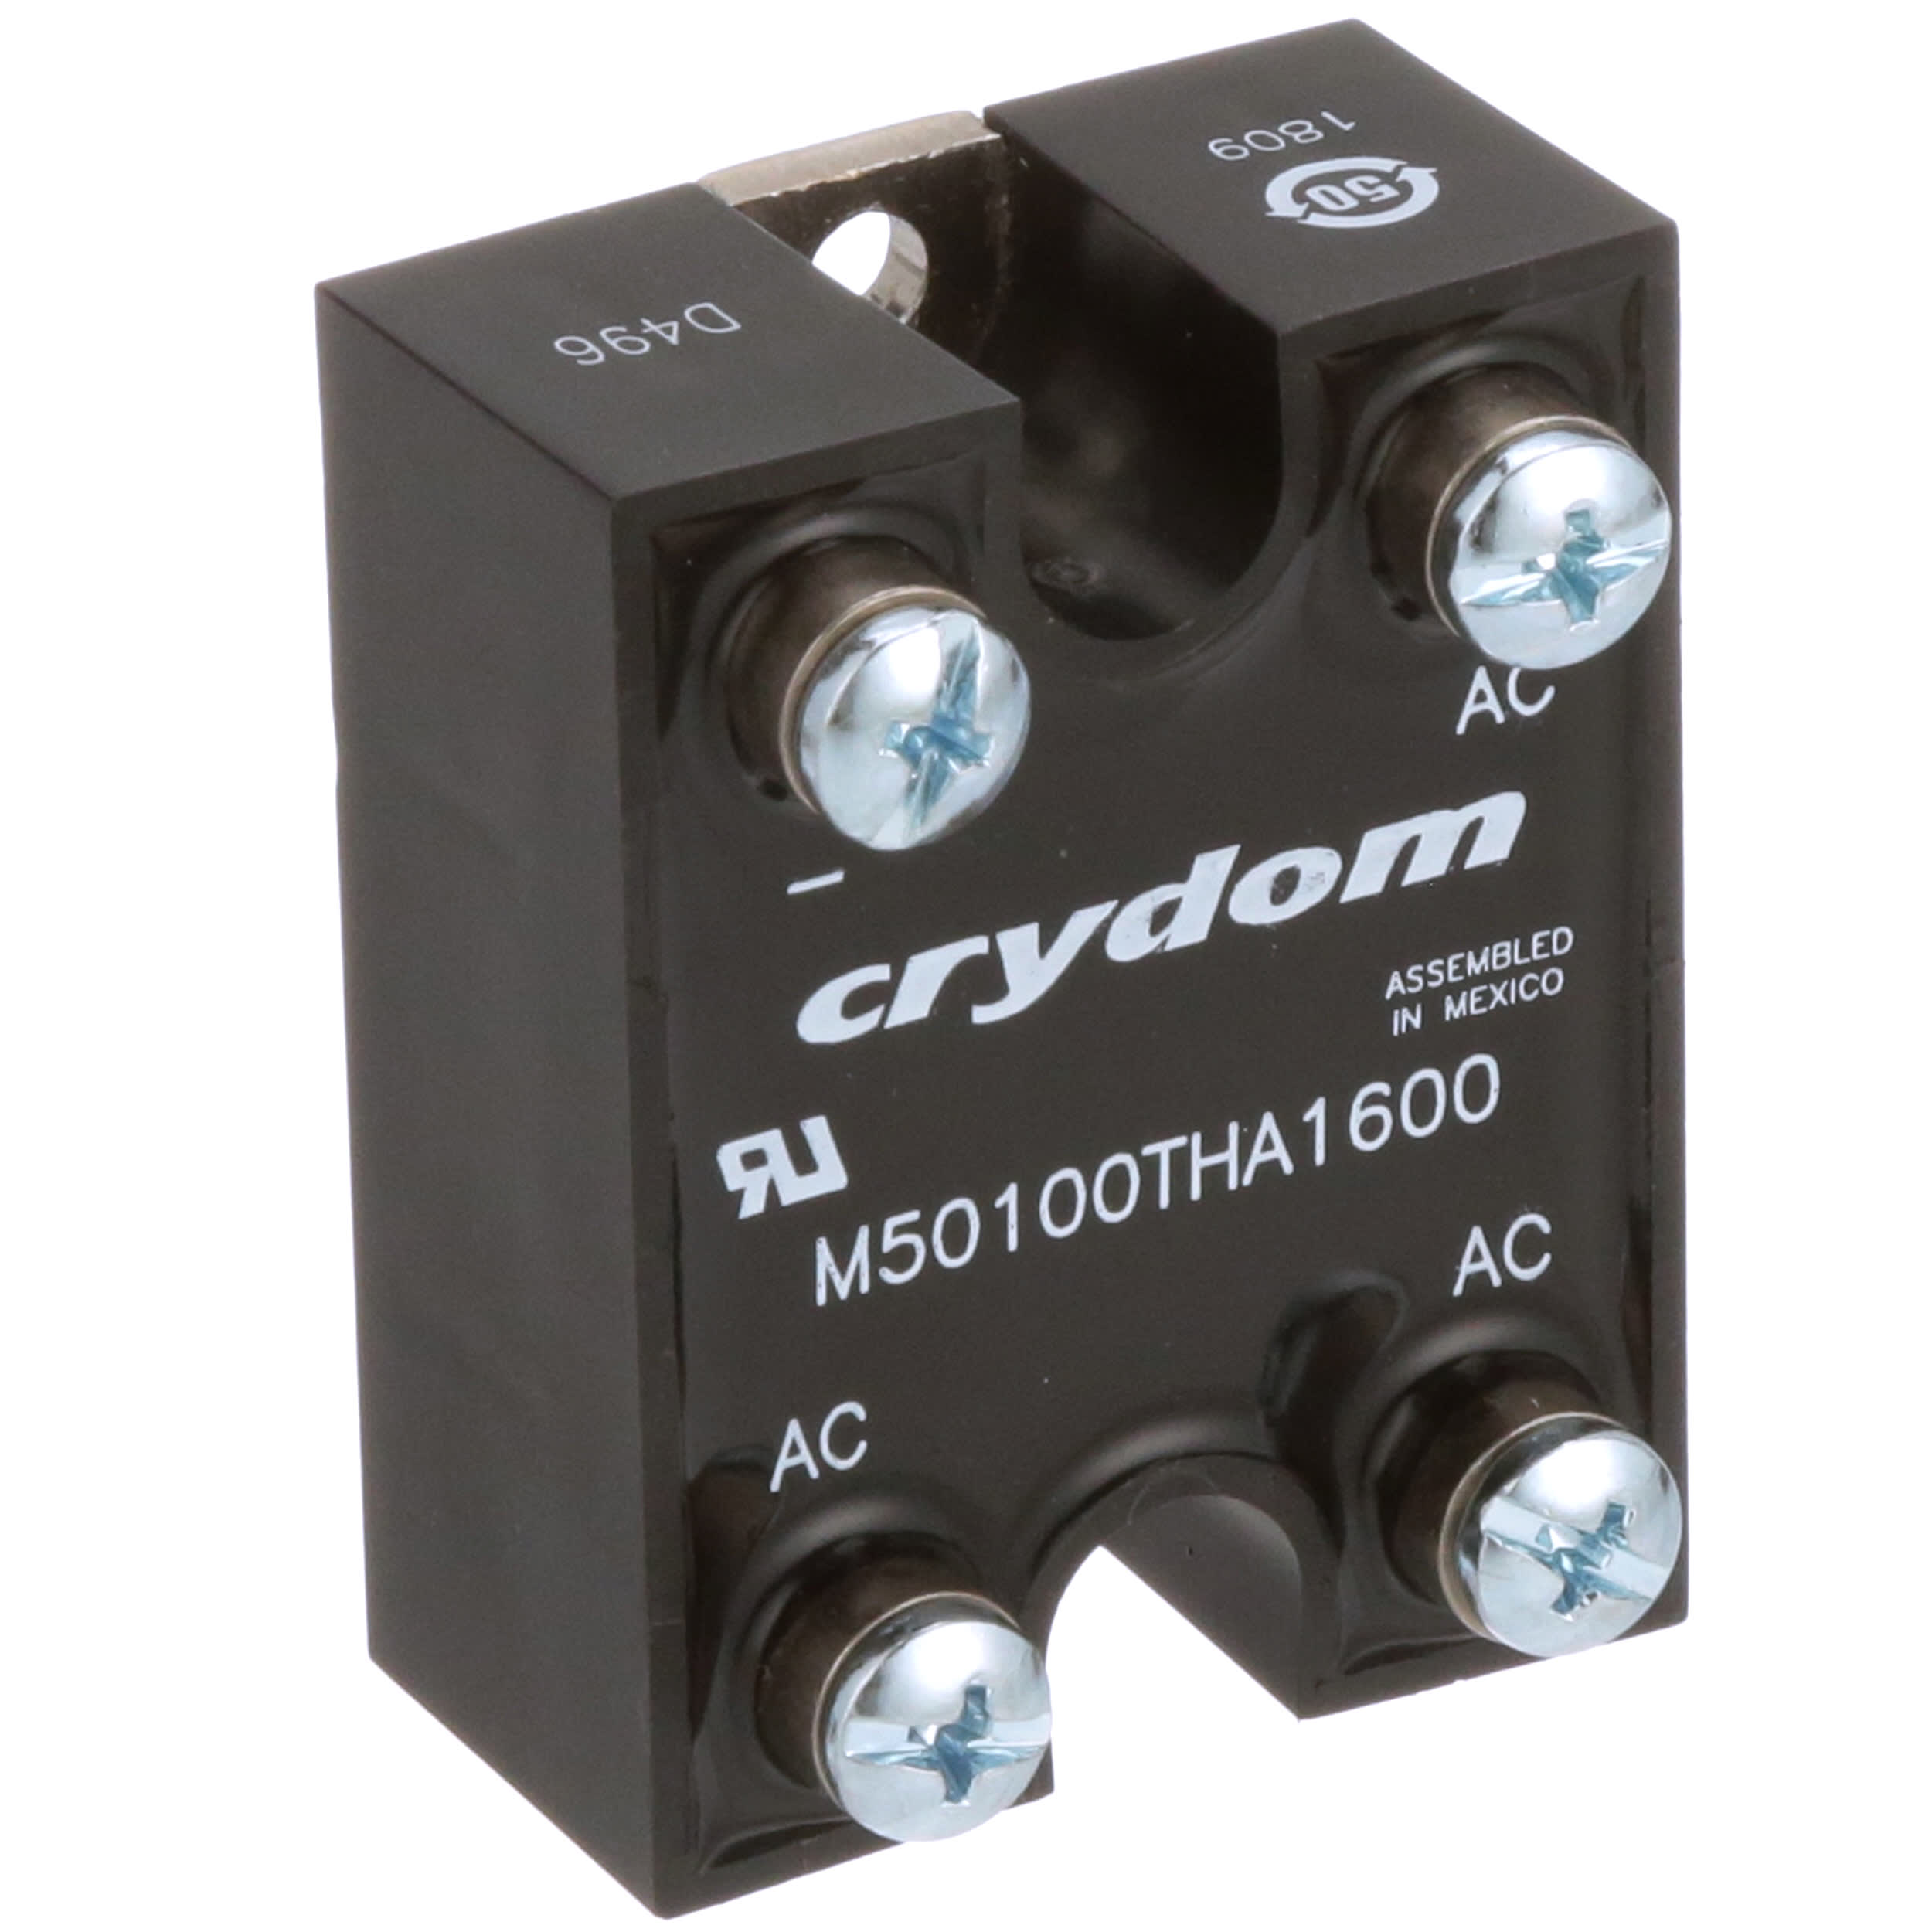   CRYDOM (brand of Sensata Technologies) M50100THA1600